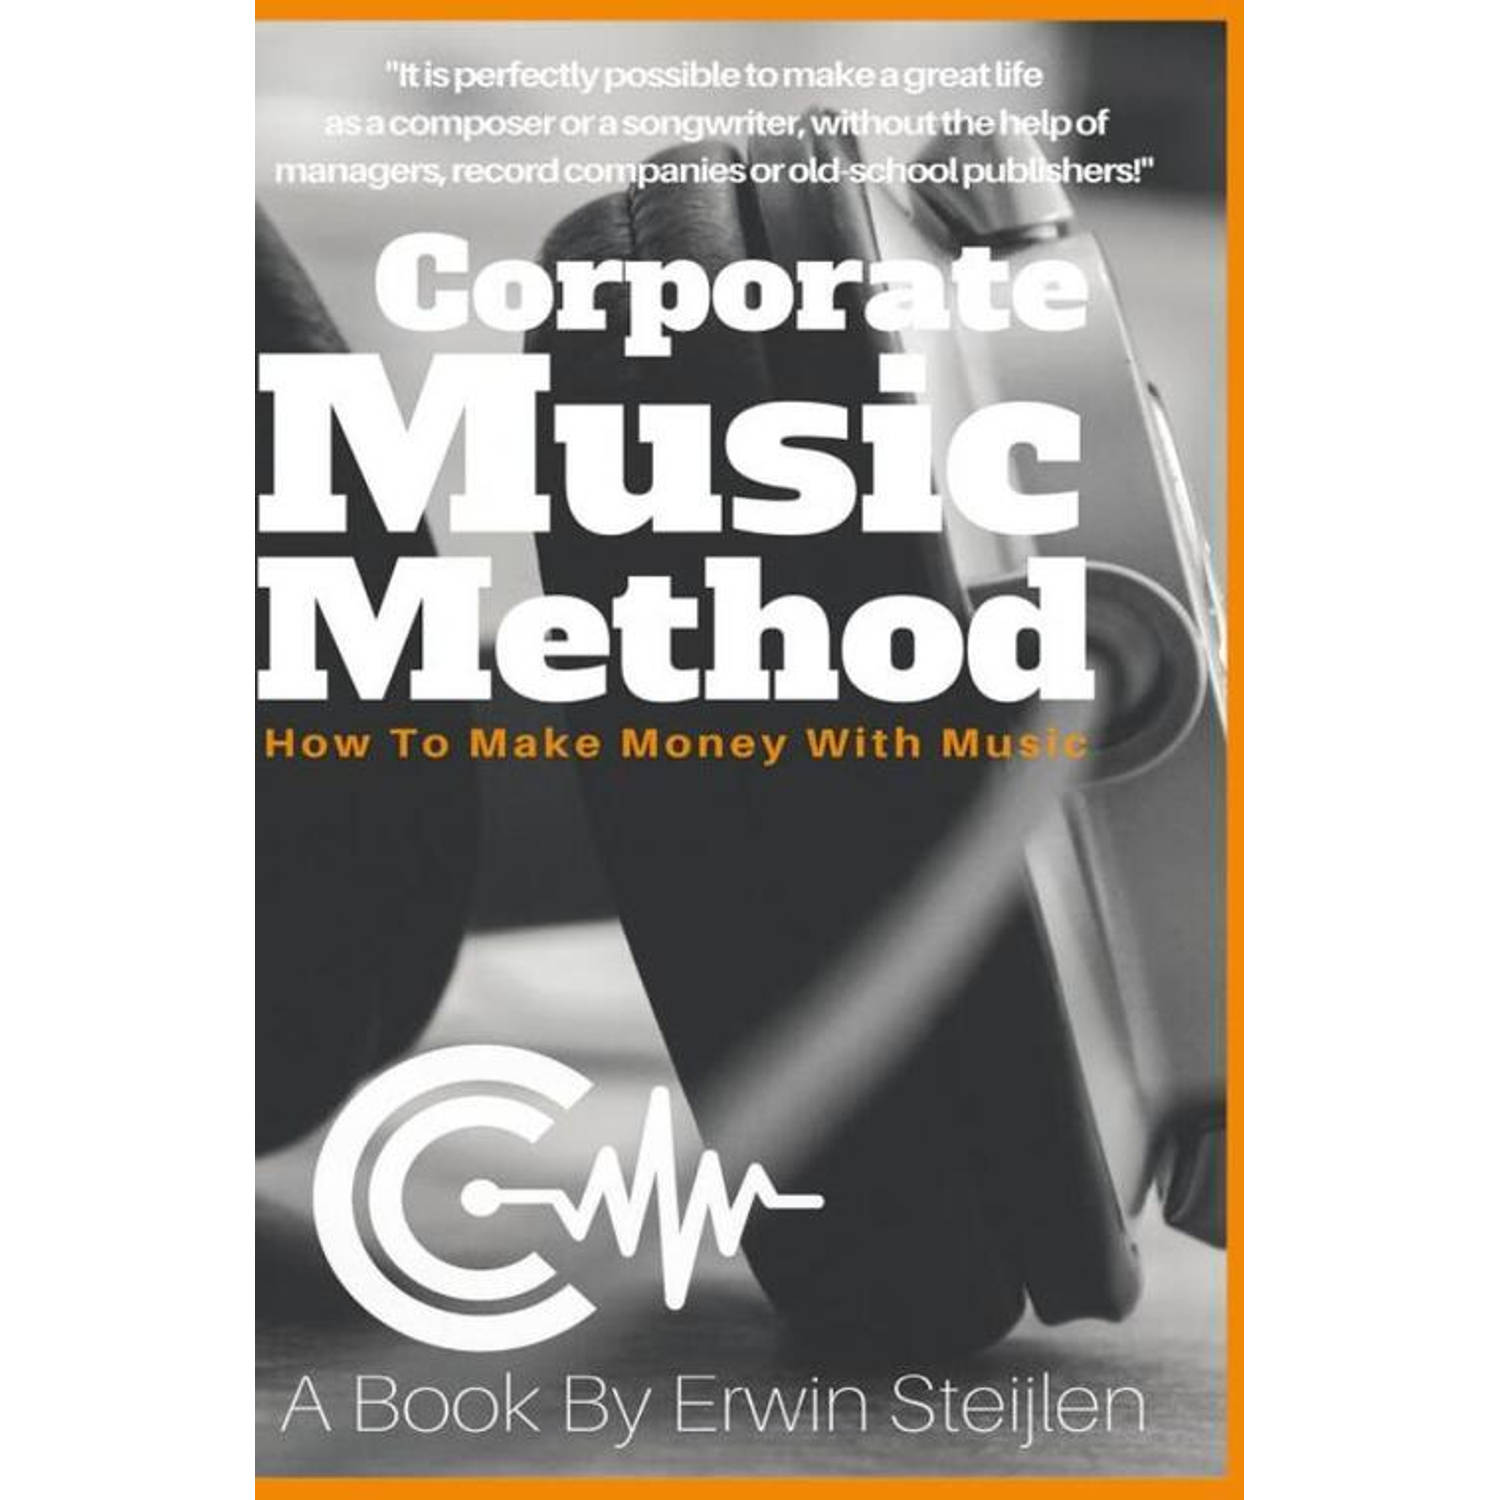 Corporate music method. how to make money with music, Erwin Steijlen, Paperback